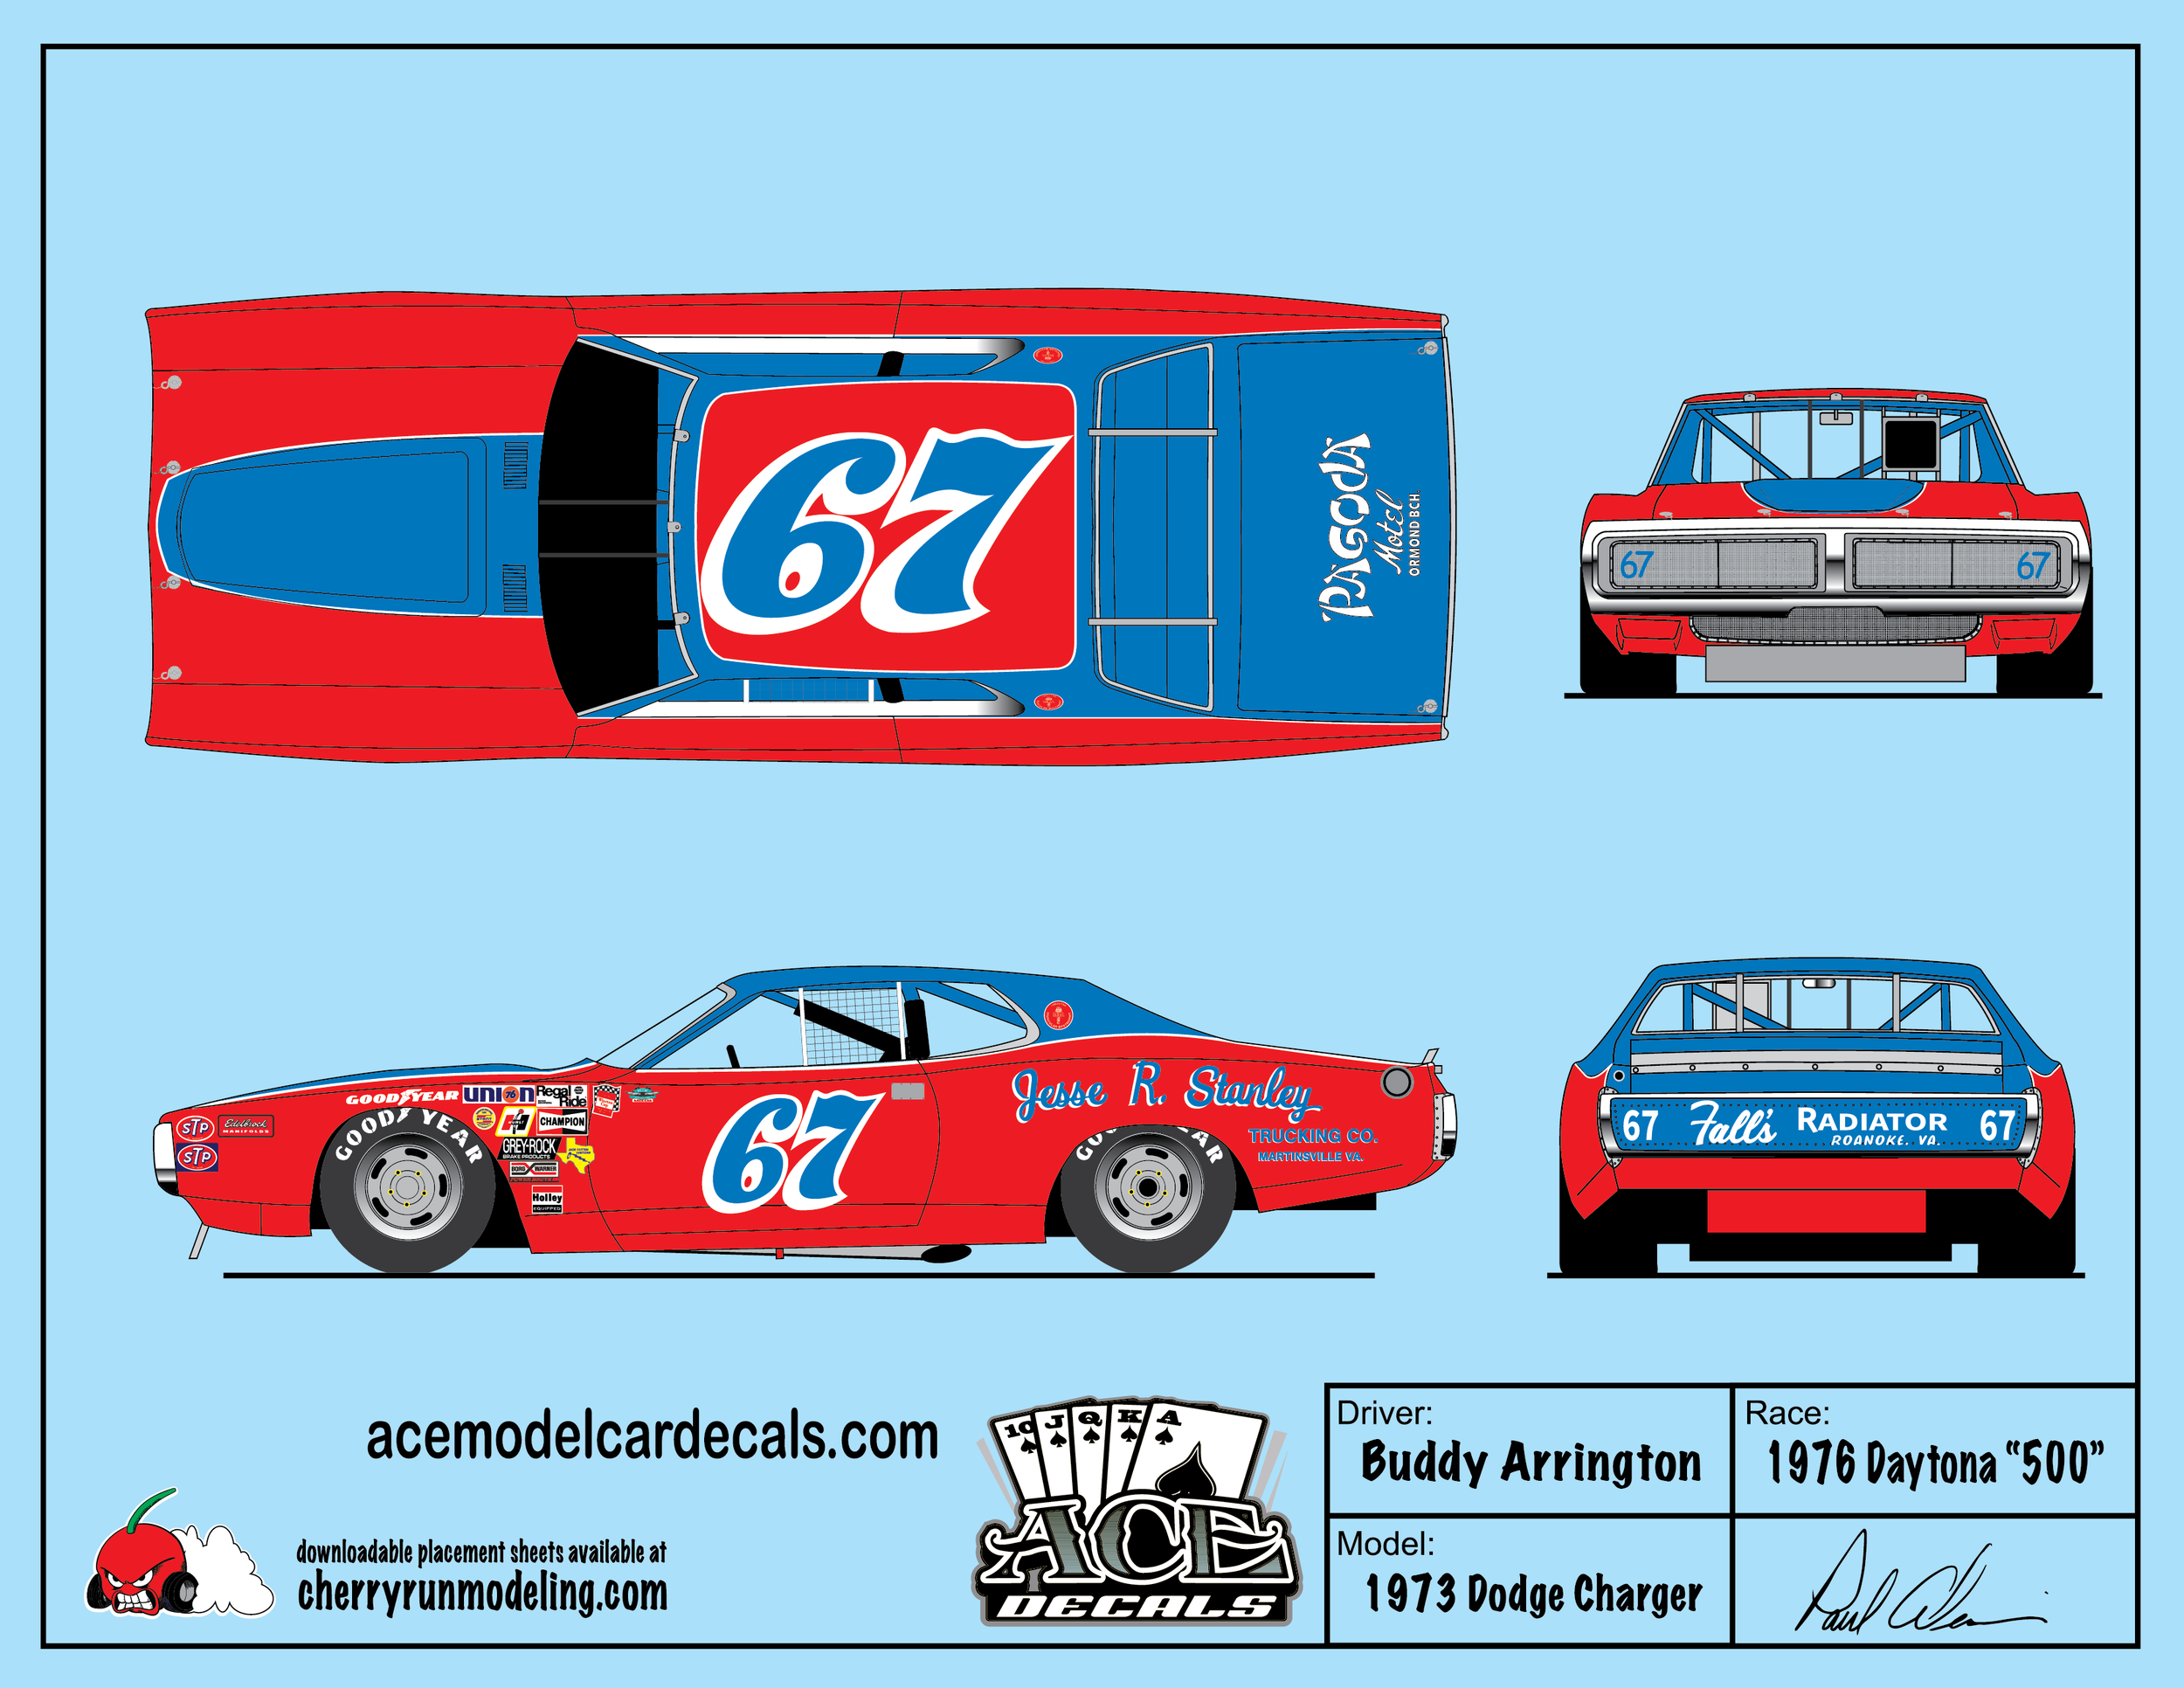 Buddy Arrington 1976 Daytona 500-01.png